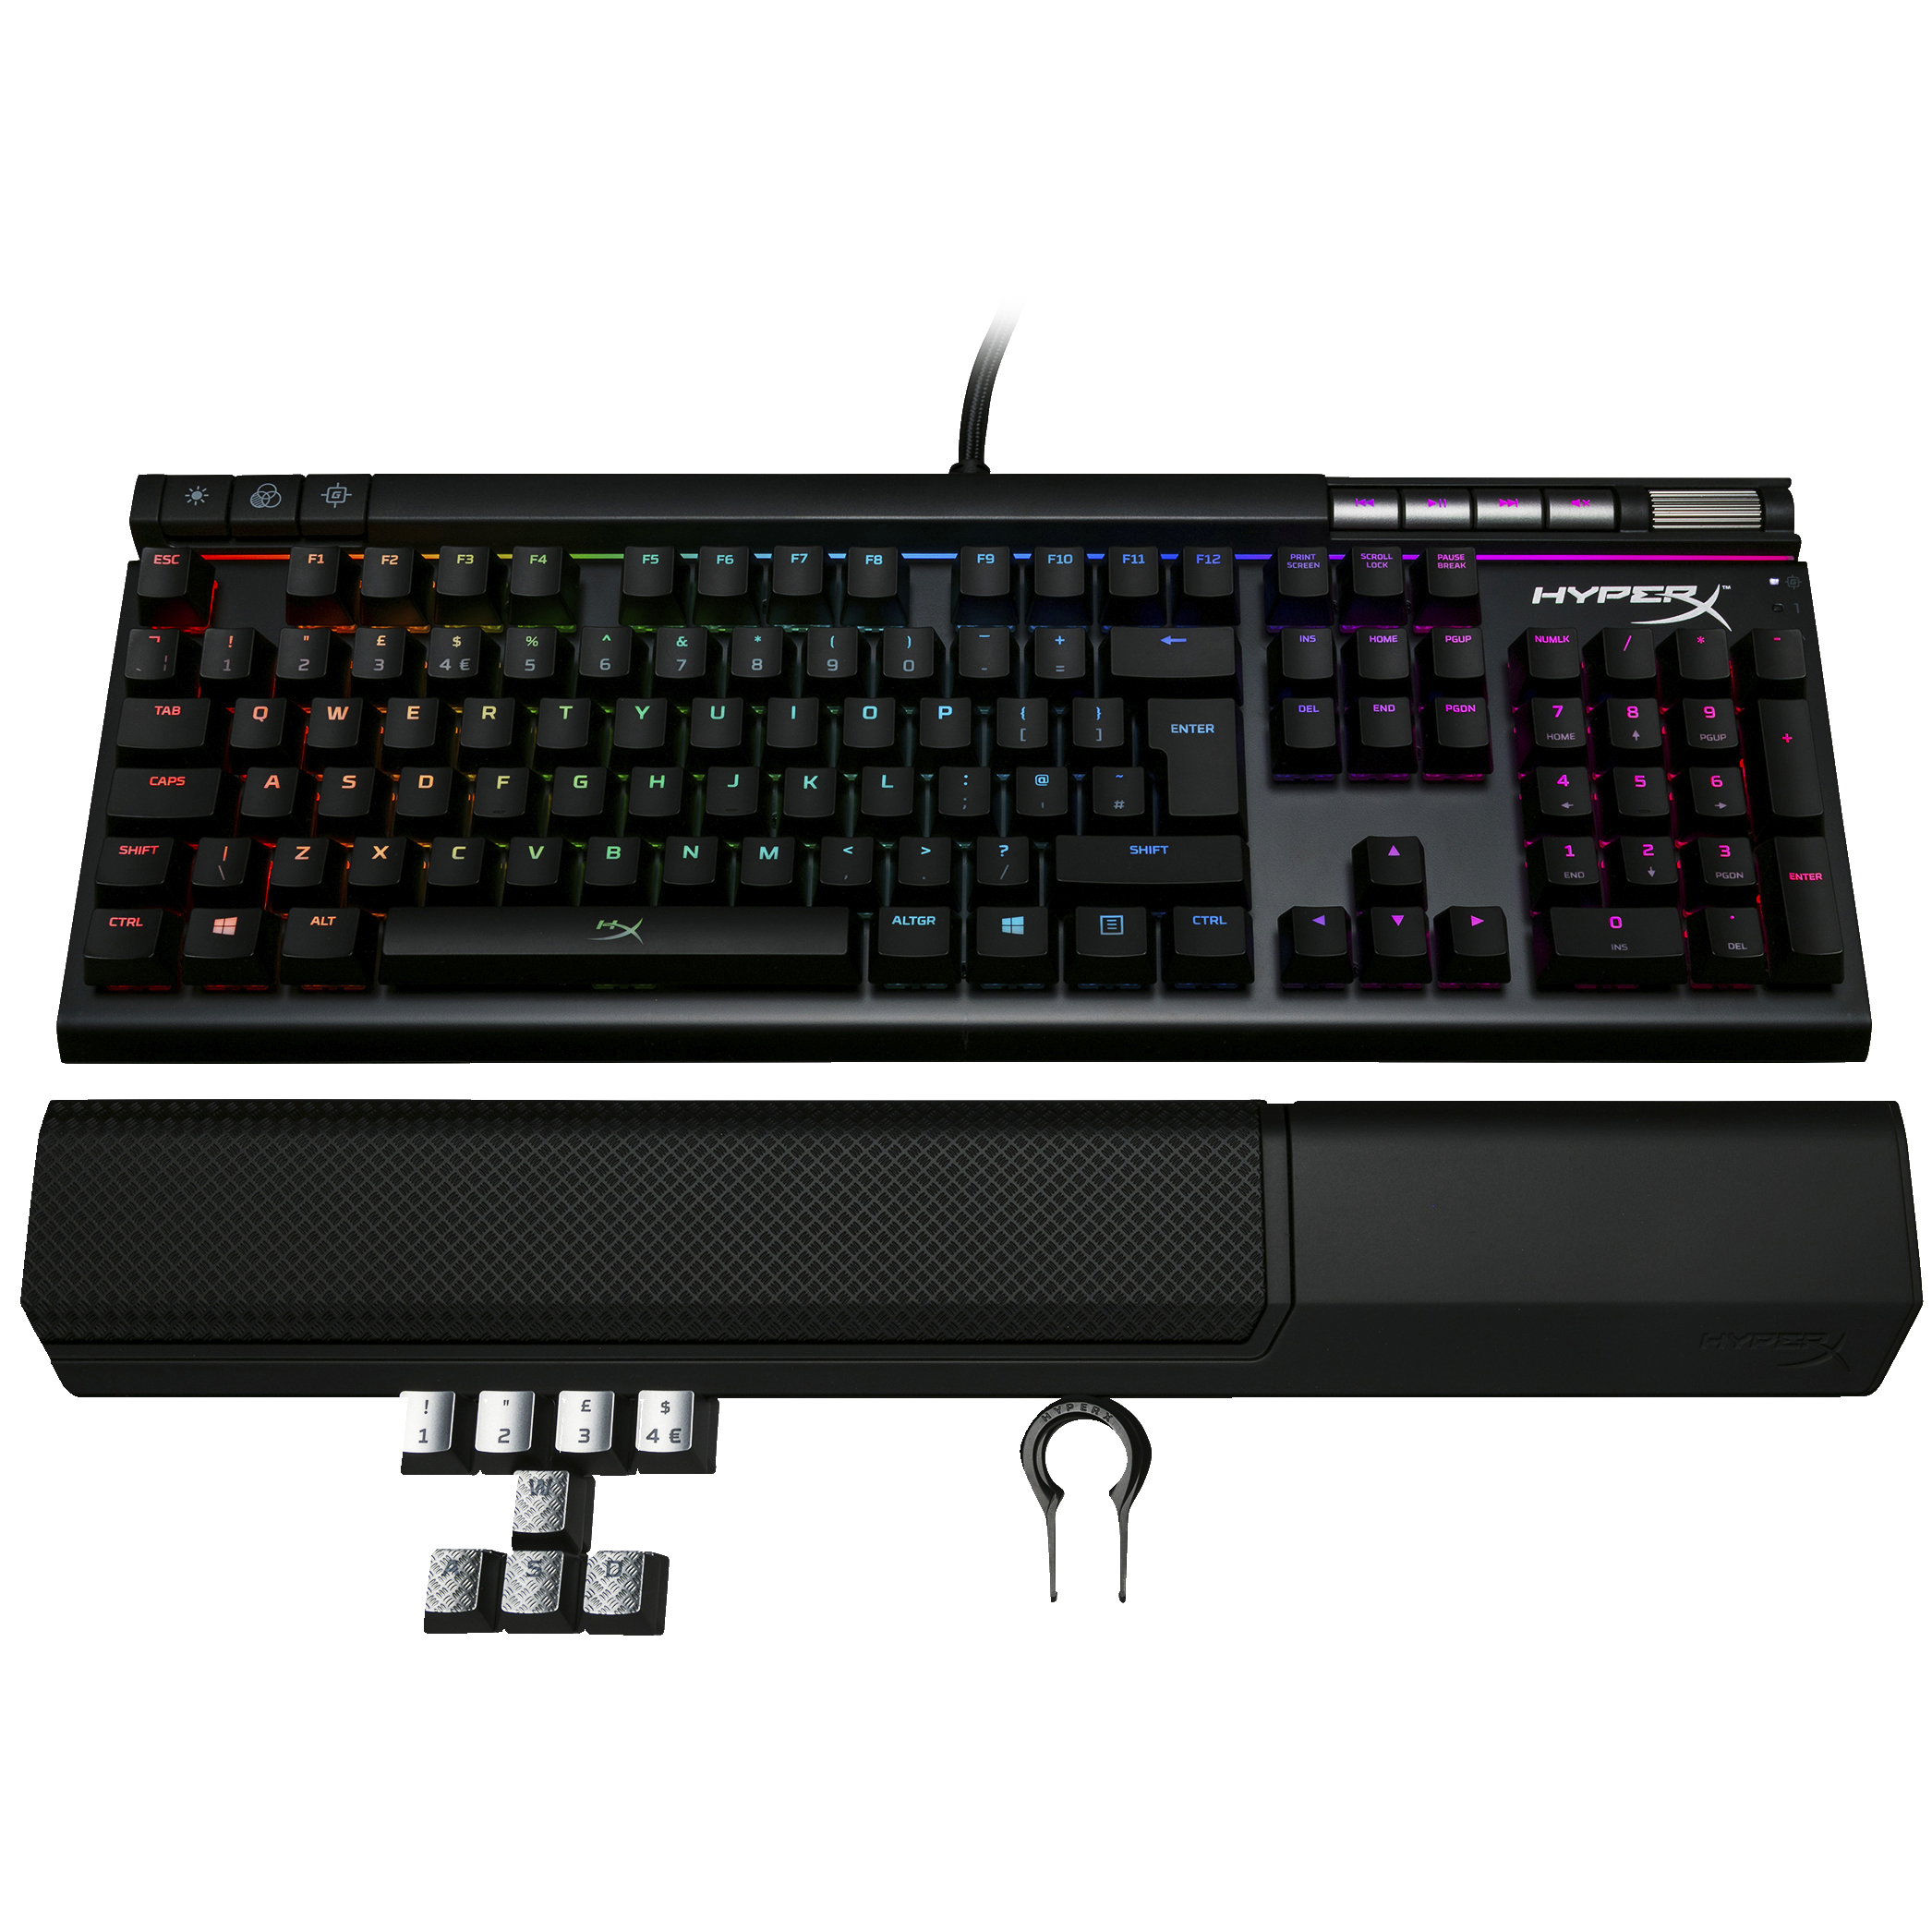 HyperX Alloy Elite RGB gamingtastatur - Mus og tastatur - Elkjøp